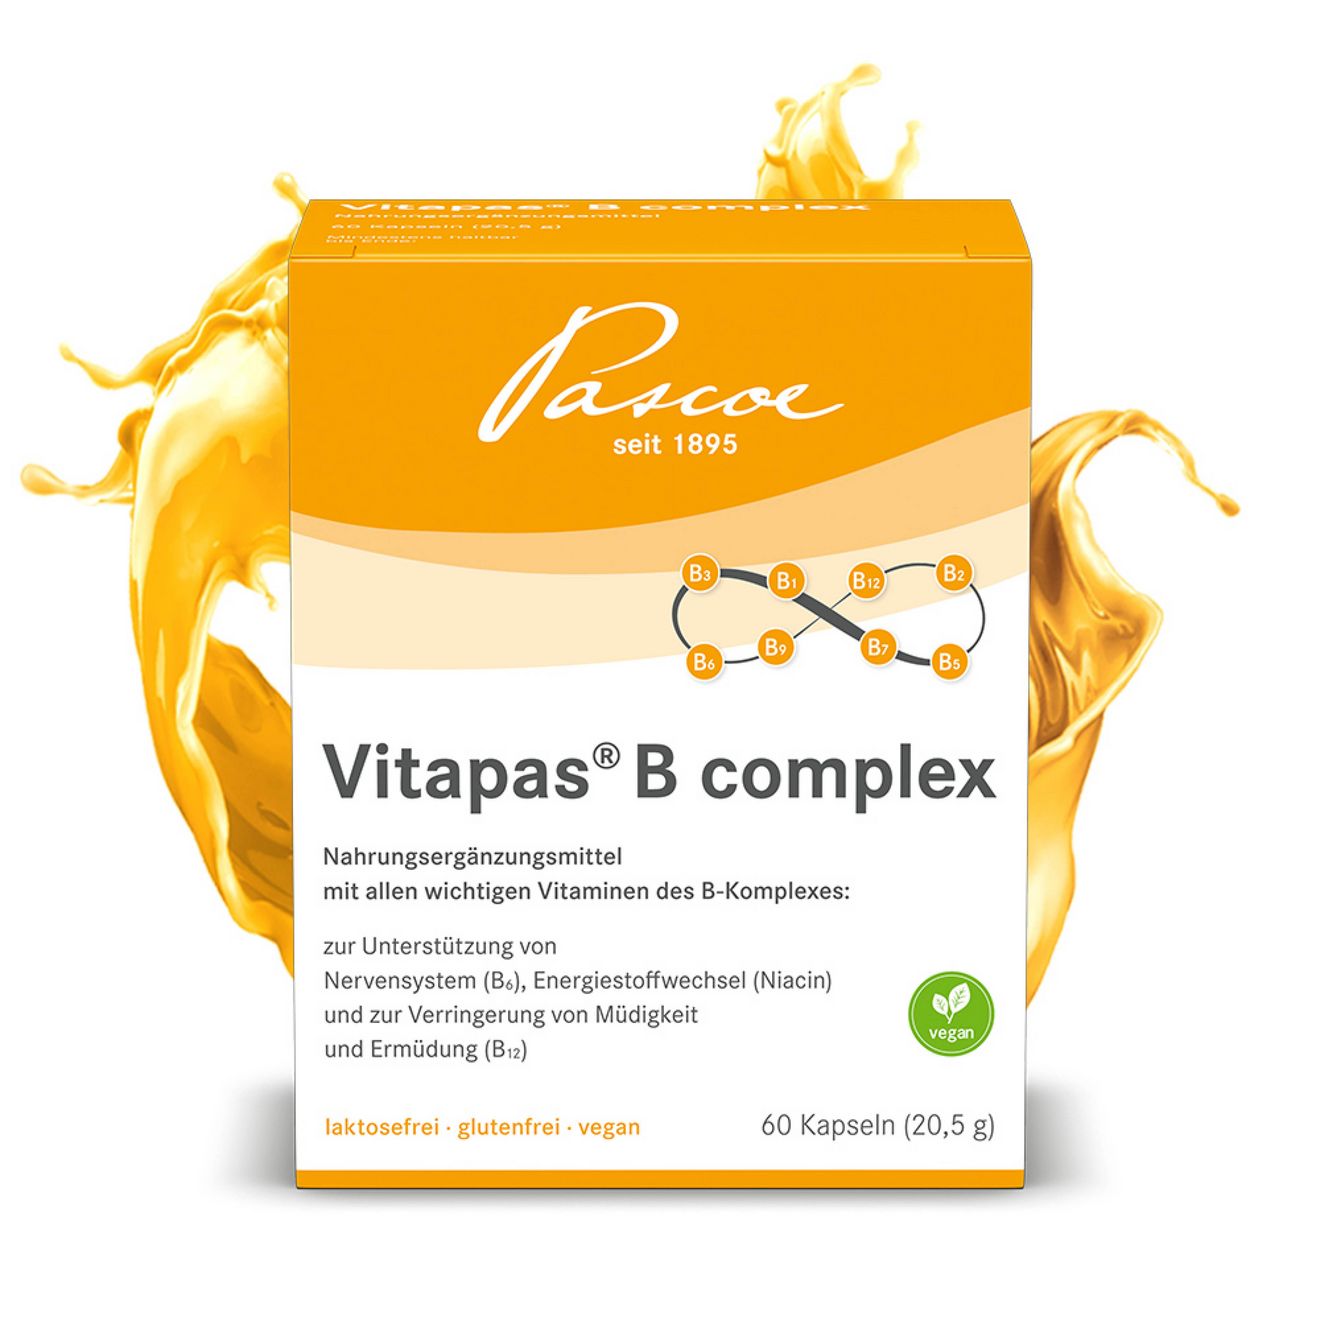 Vitapas B complex Packshot